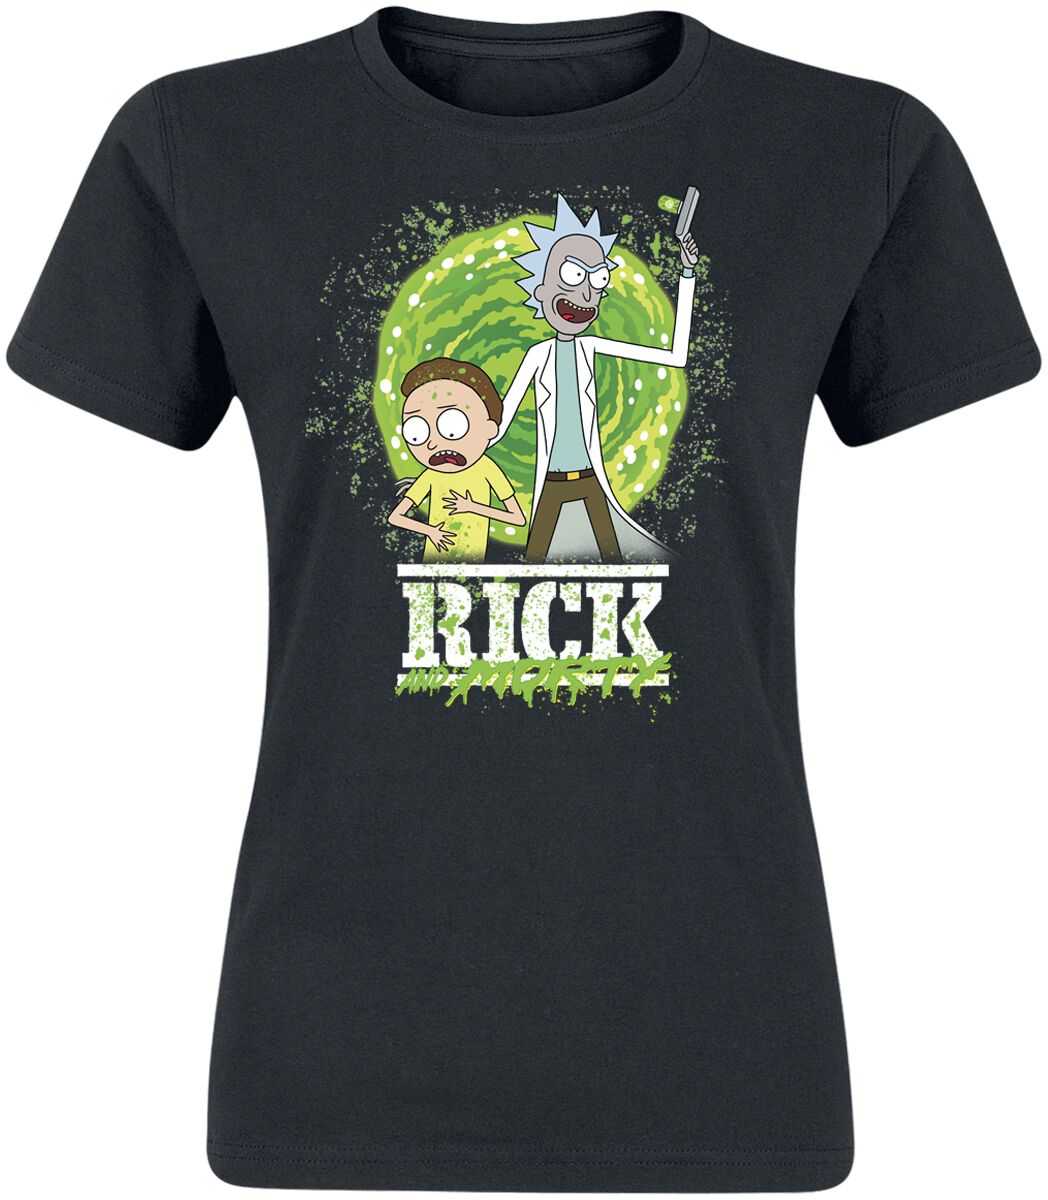 Rick And Morty Season 6 T-Shirt schwarz in XL